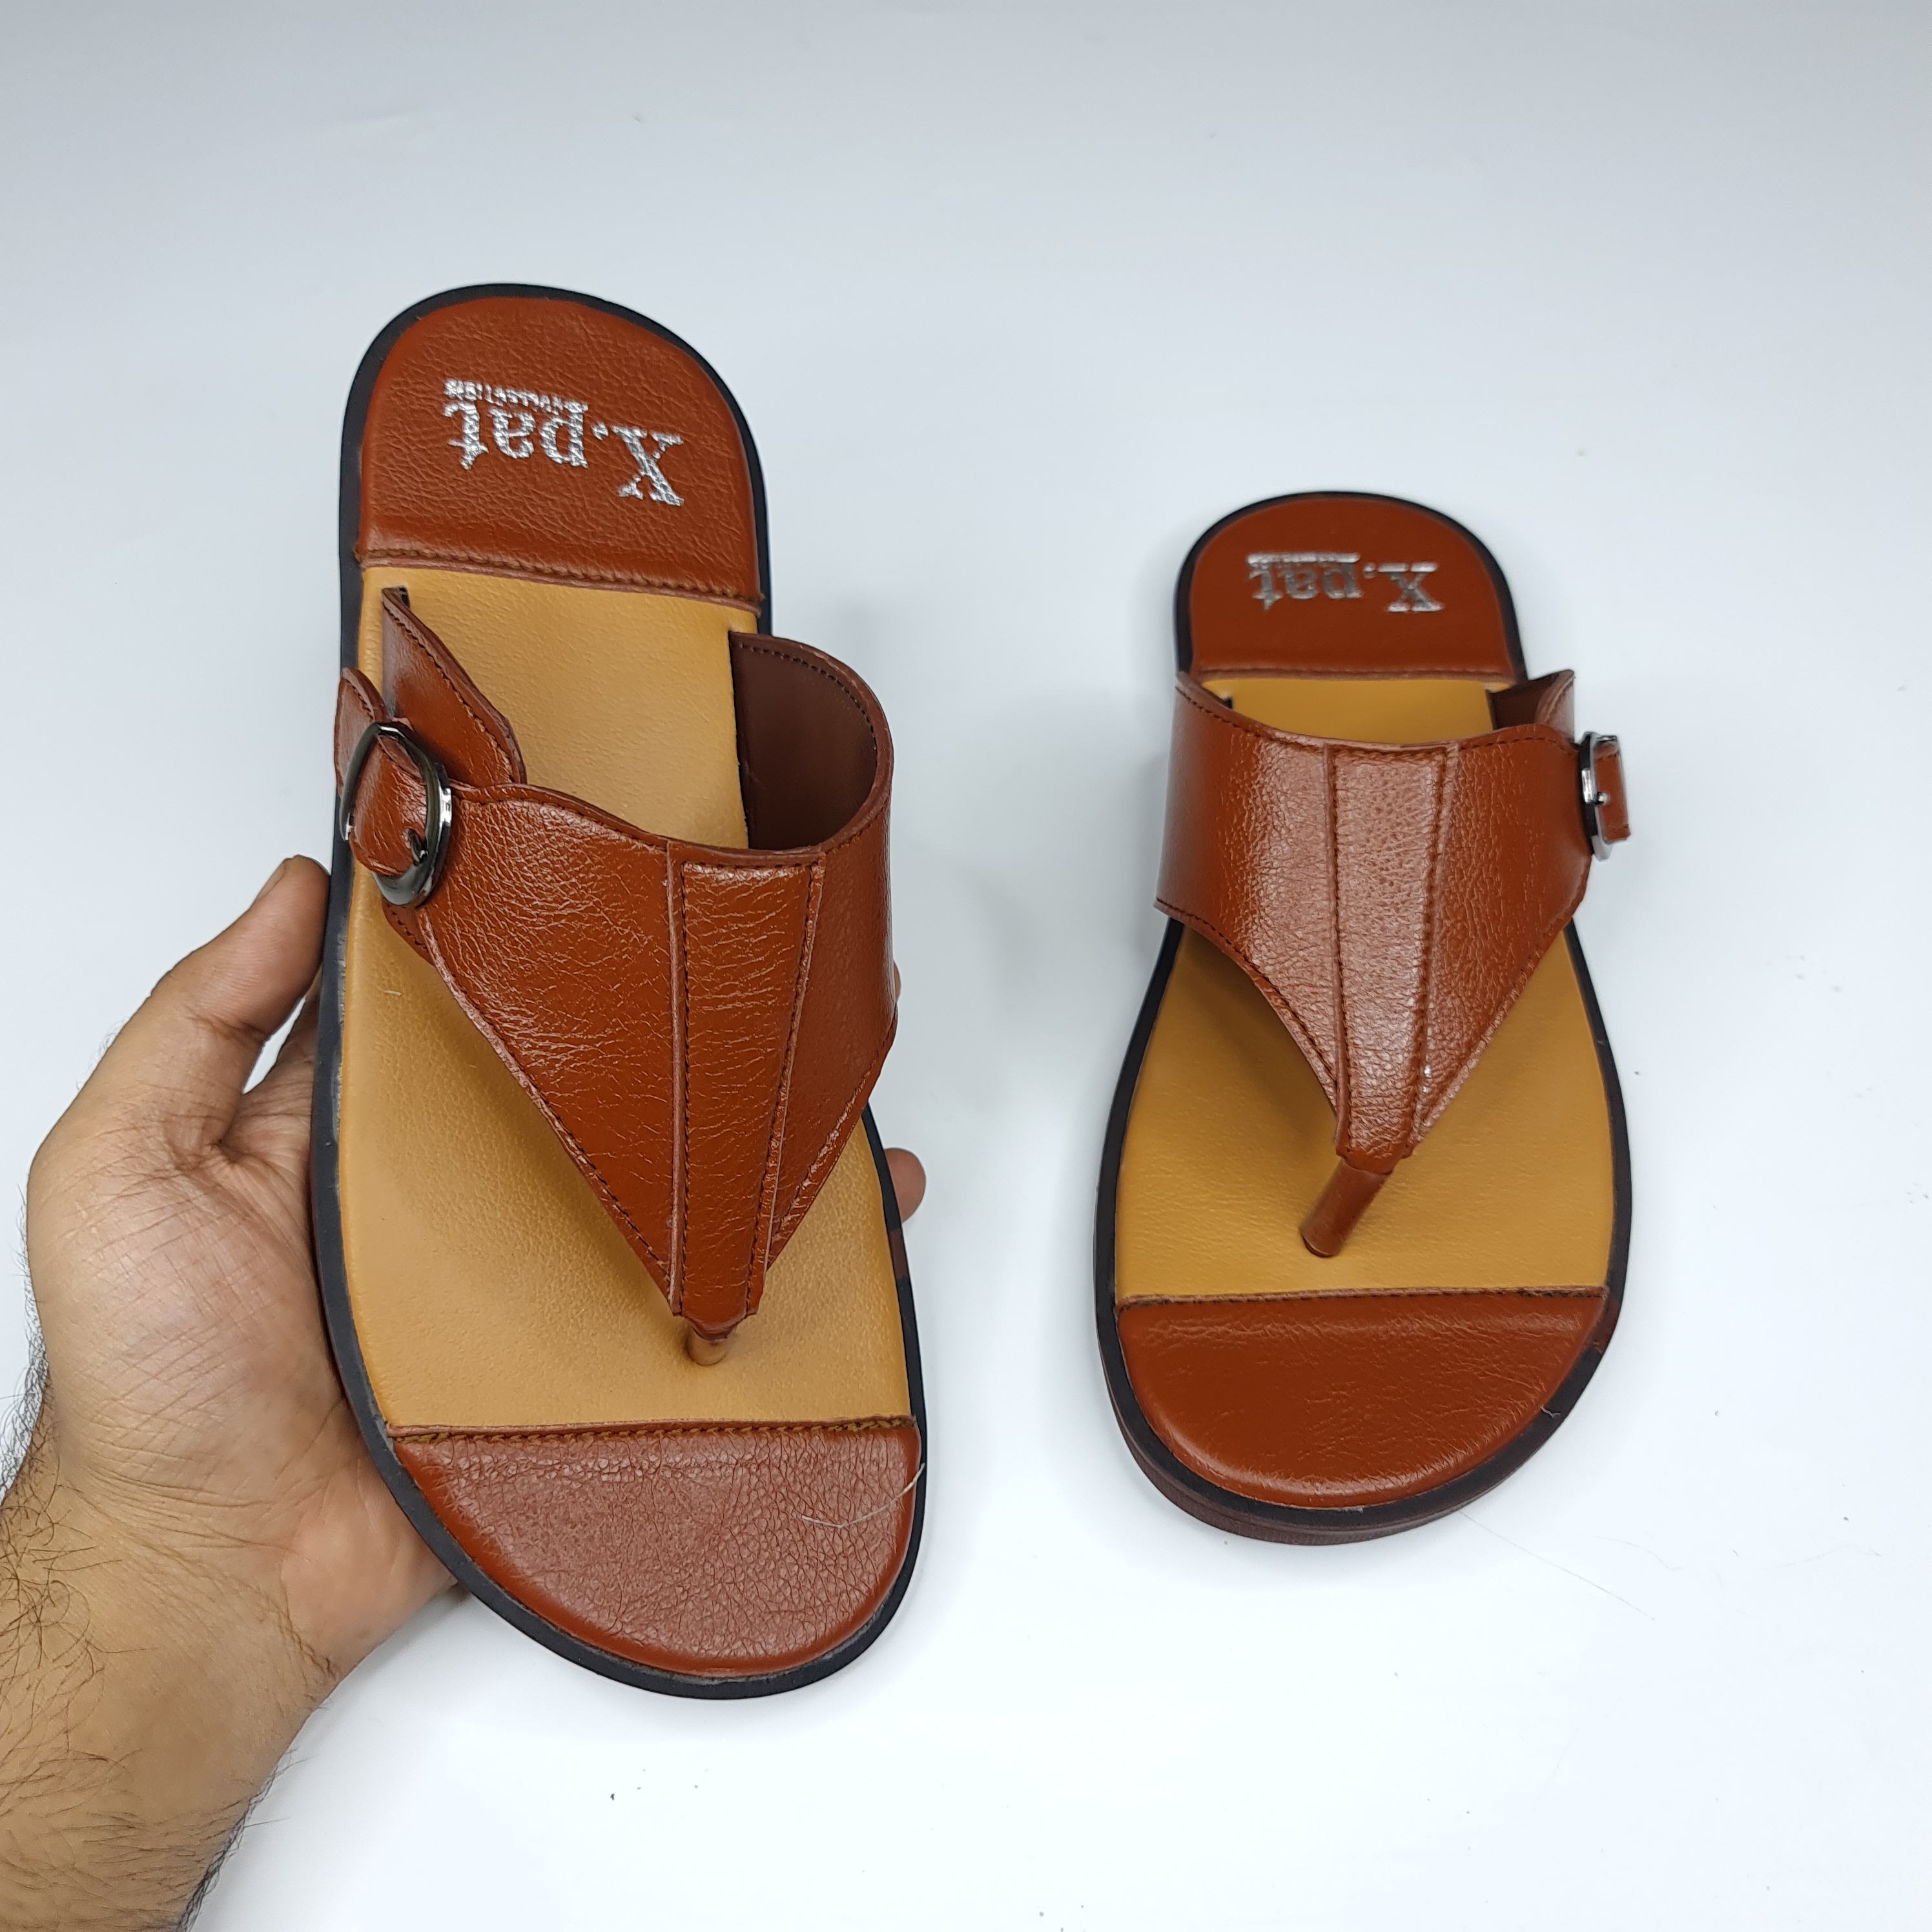 Brown Twin Buckle Slippers - Maha fashions -  